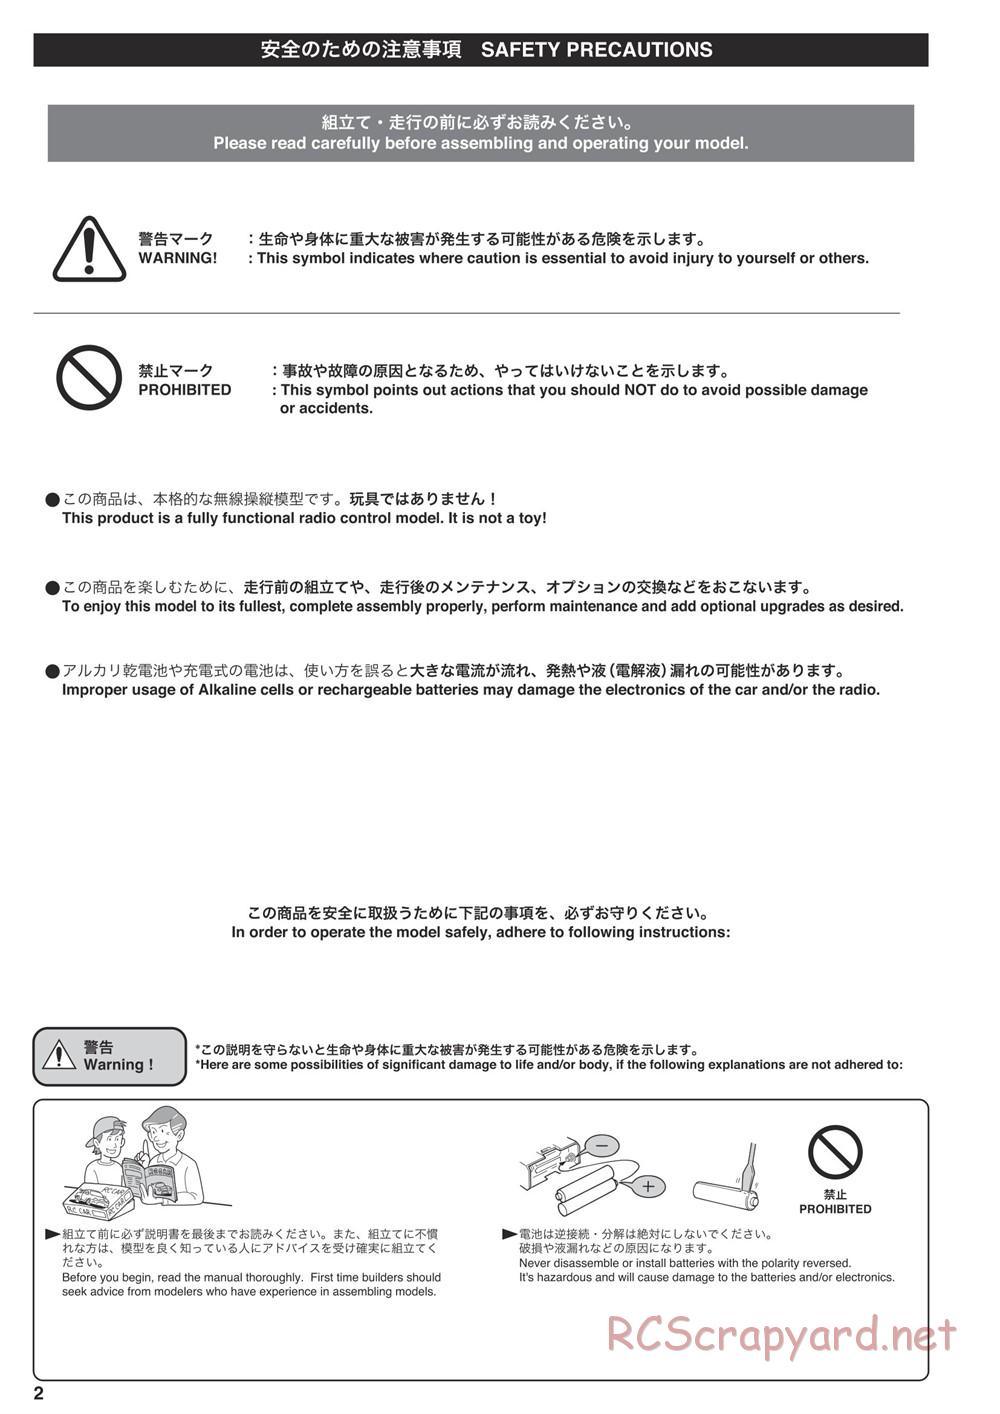 Kyosho - Inferno MP9e TKI4 - Manual - Page 2